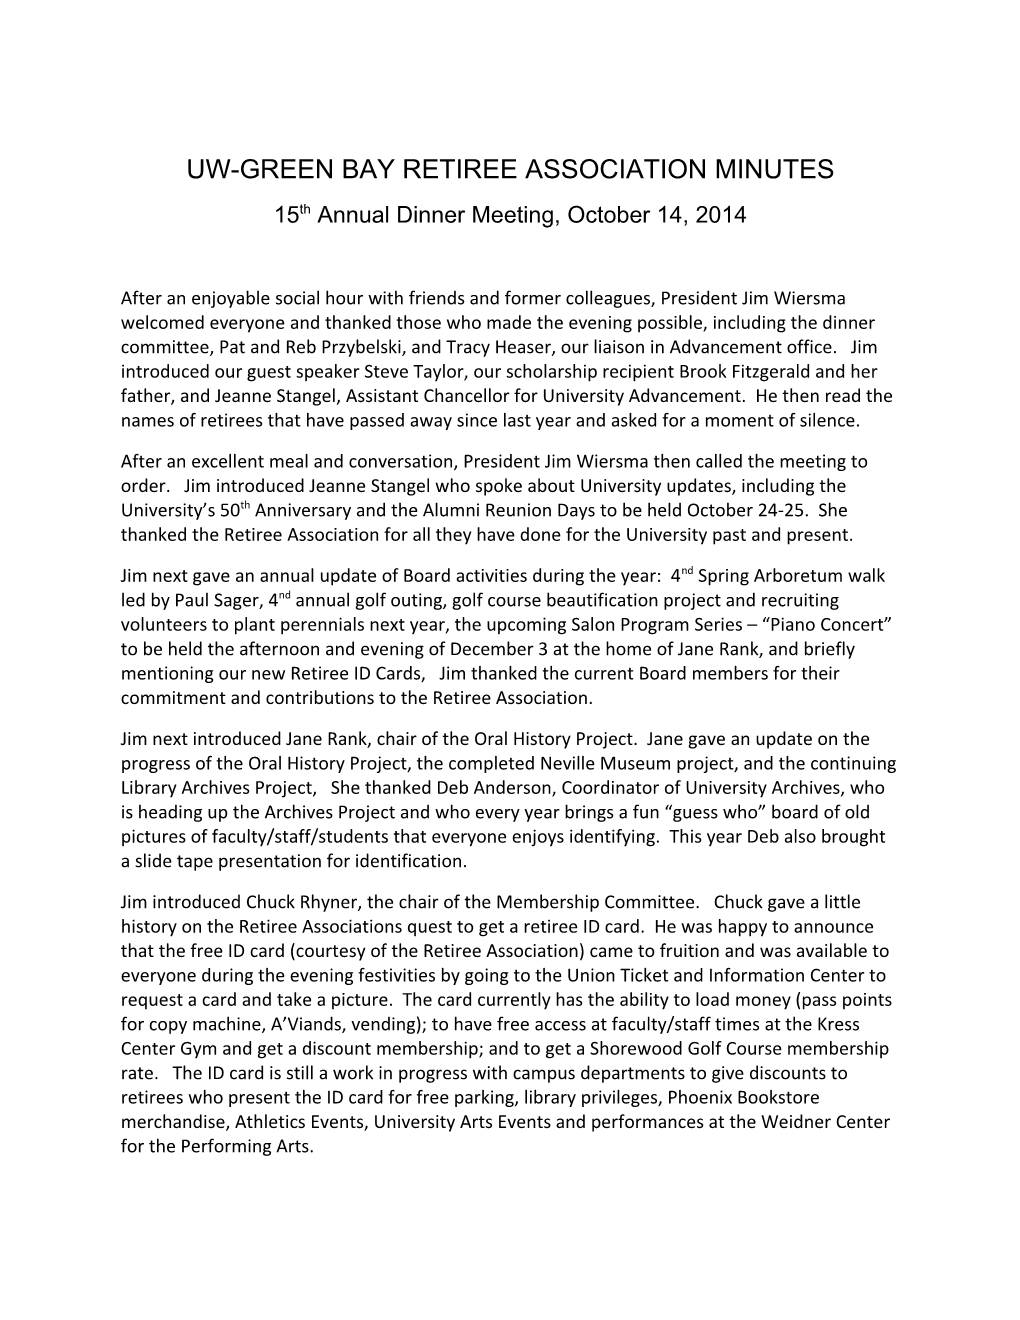 Uw-Green Bay Retiree Association Minutes